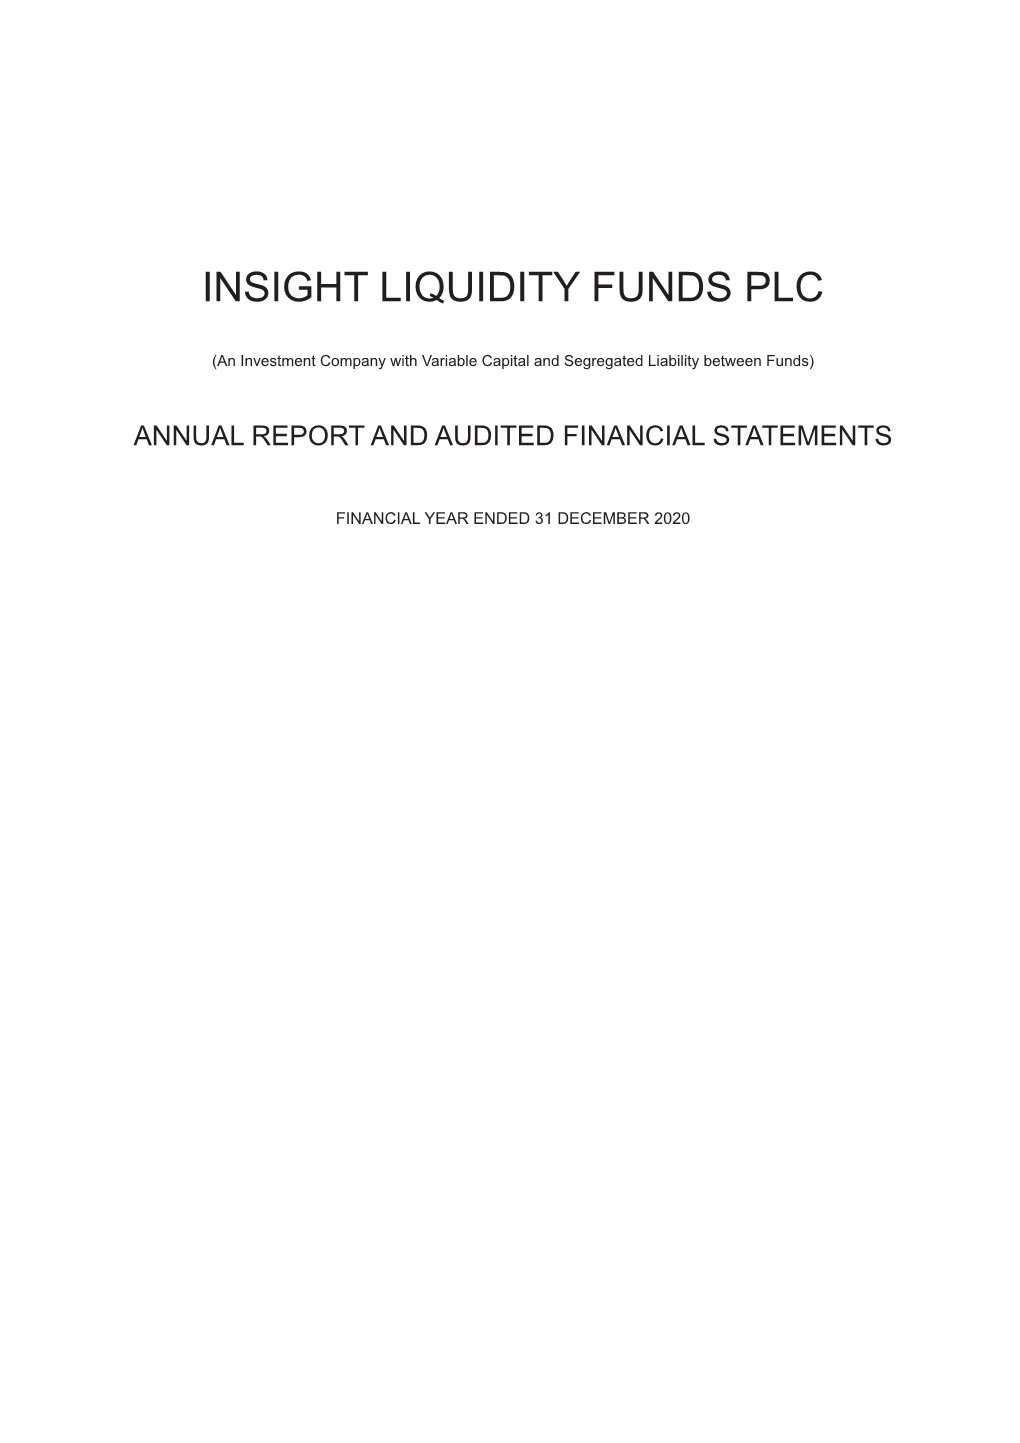 Insight Liquidity Funds PLC Annual Report